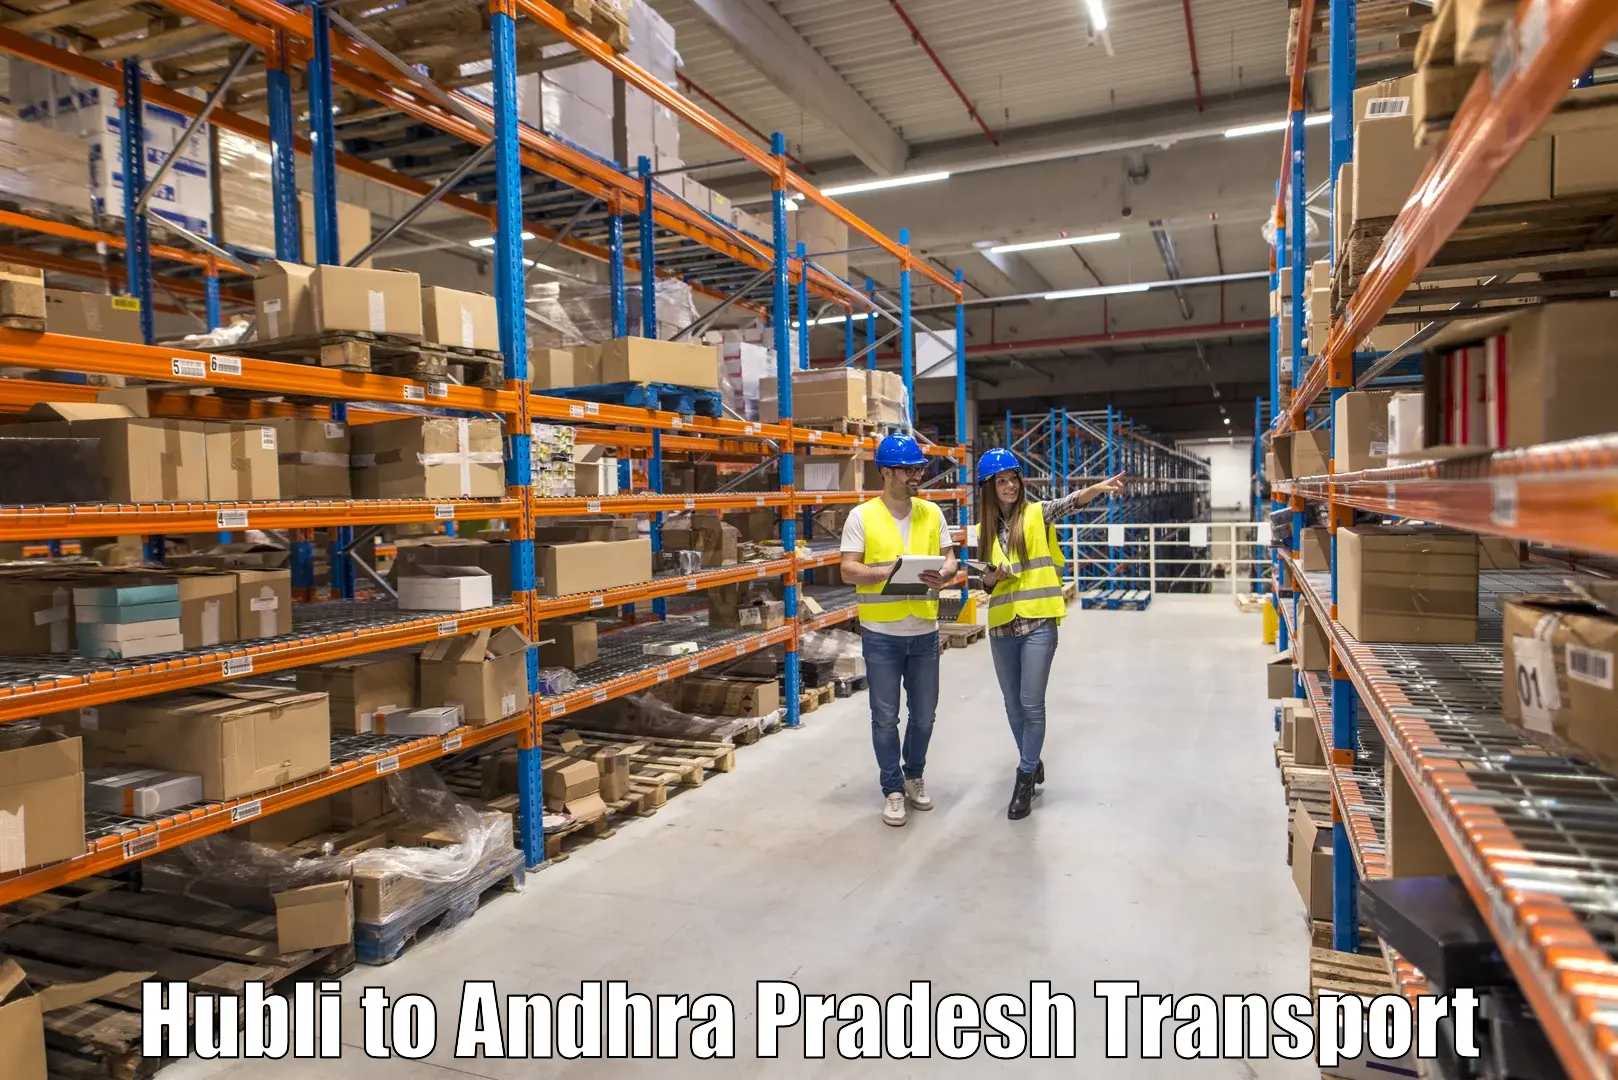 Goods delivery service Hubli to Tirupati